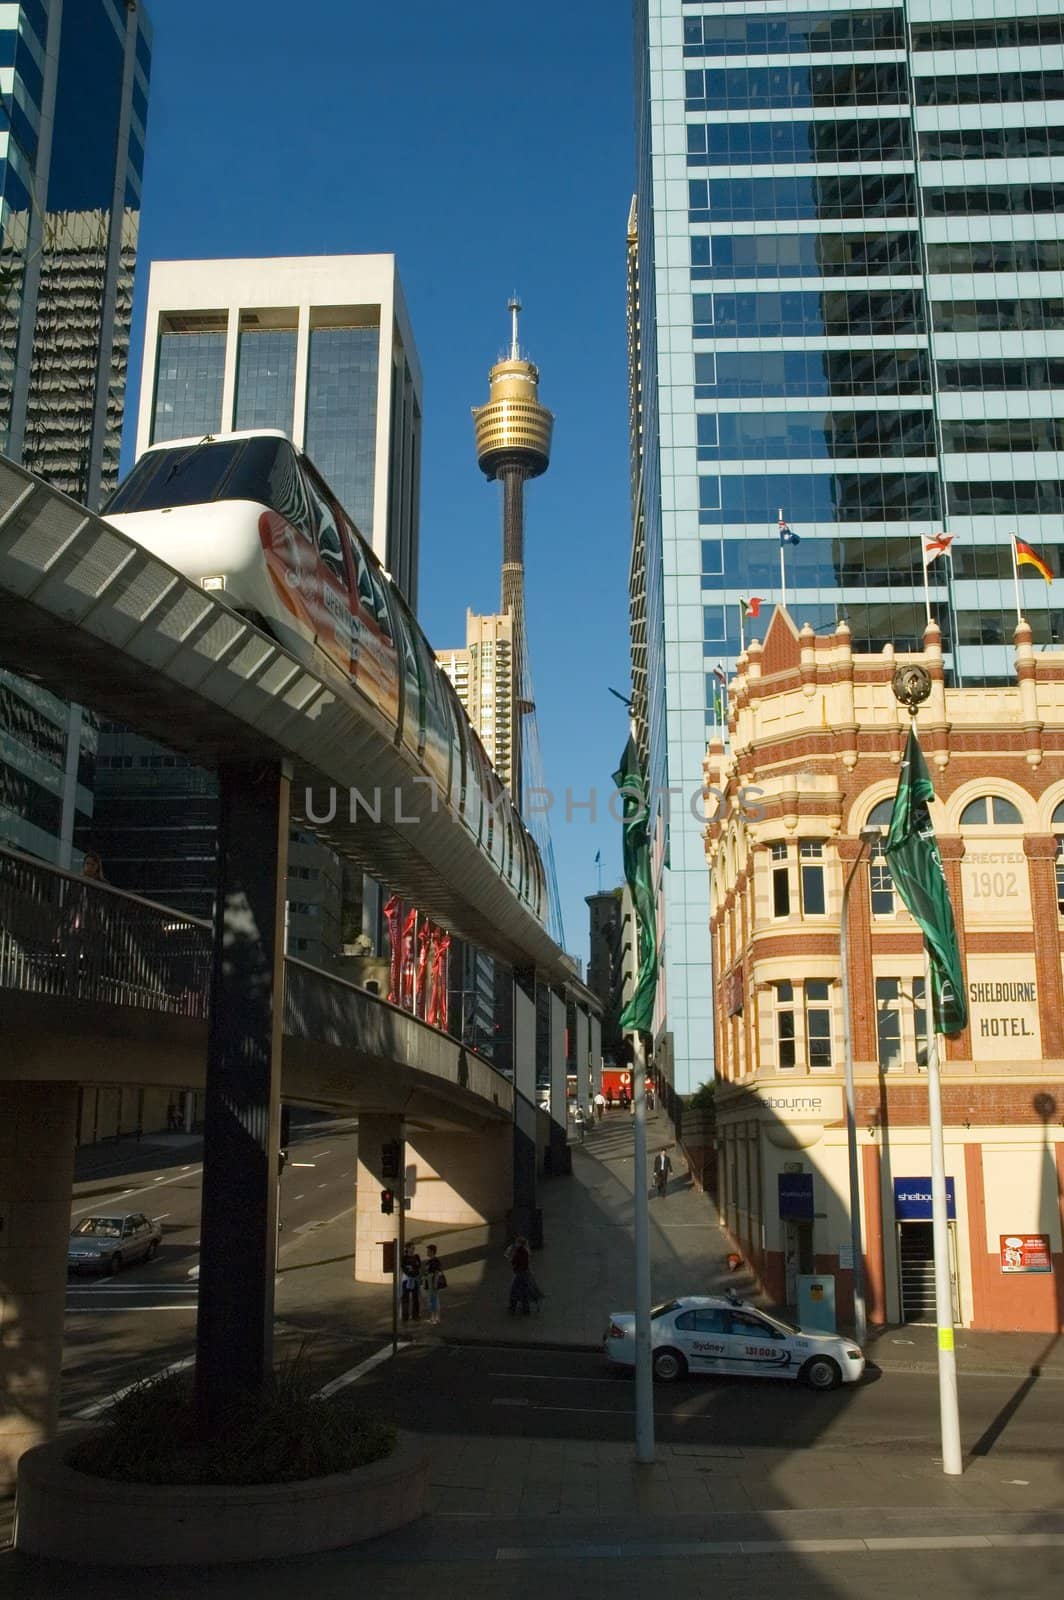 Sydney monorail by rorem